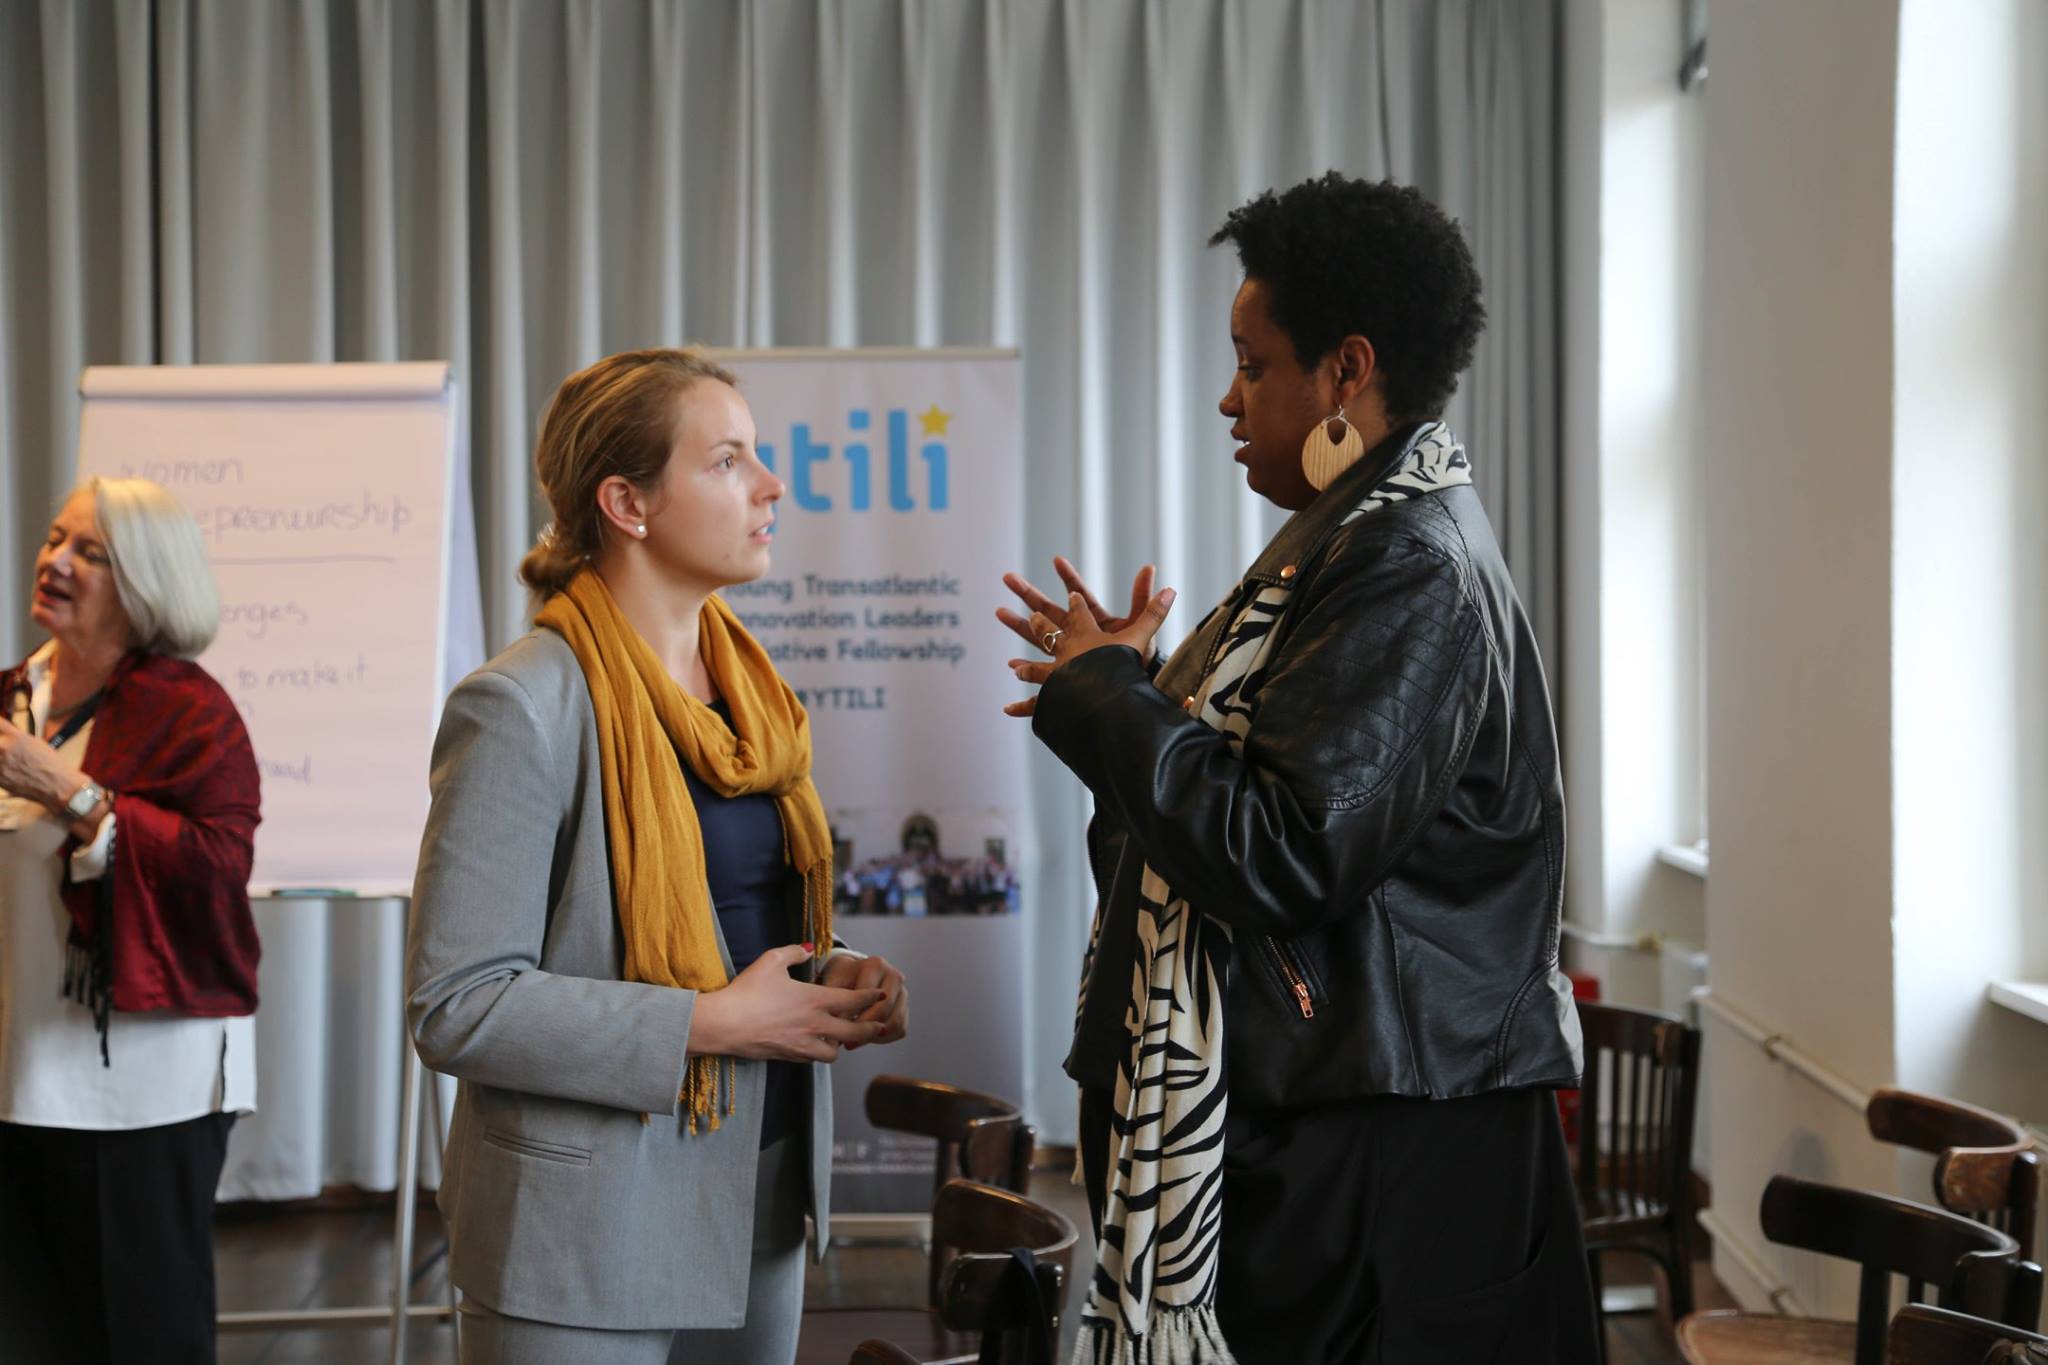 Two YTILI Fellows having a Dialogue at a YTILI event.